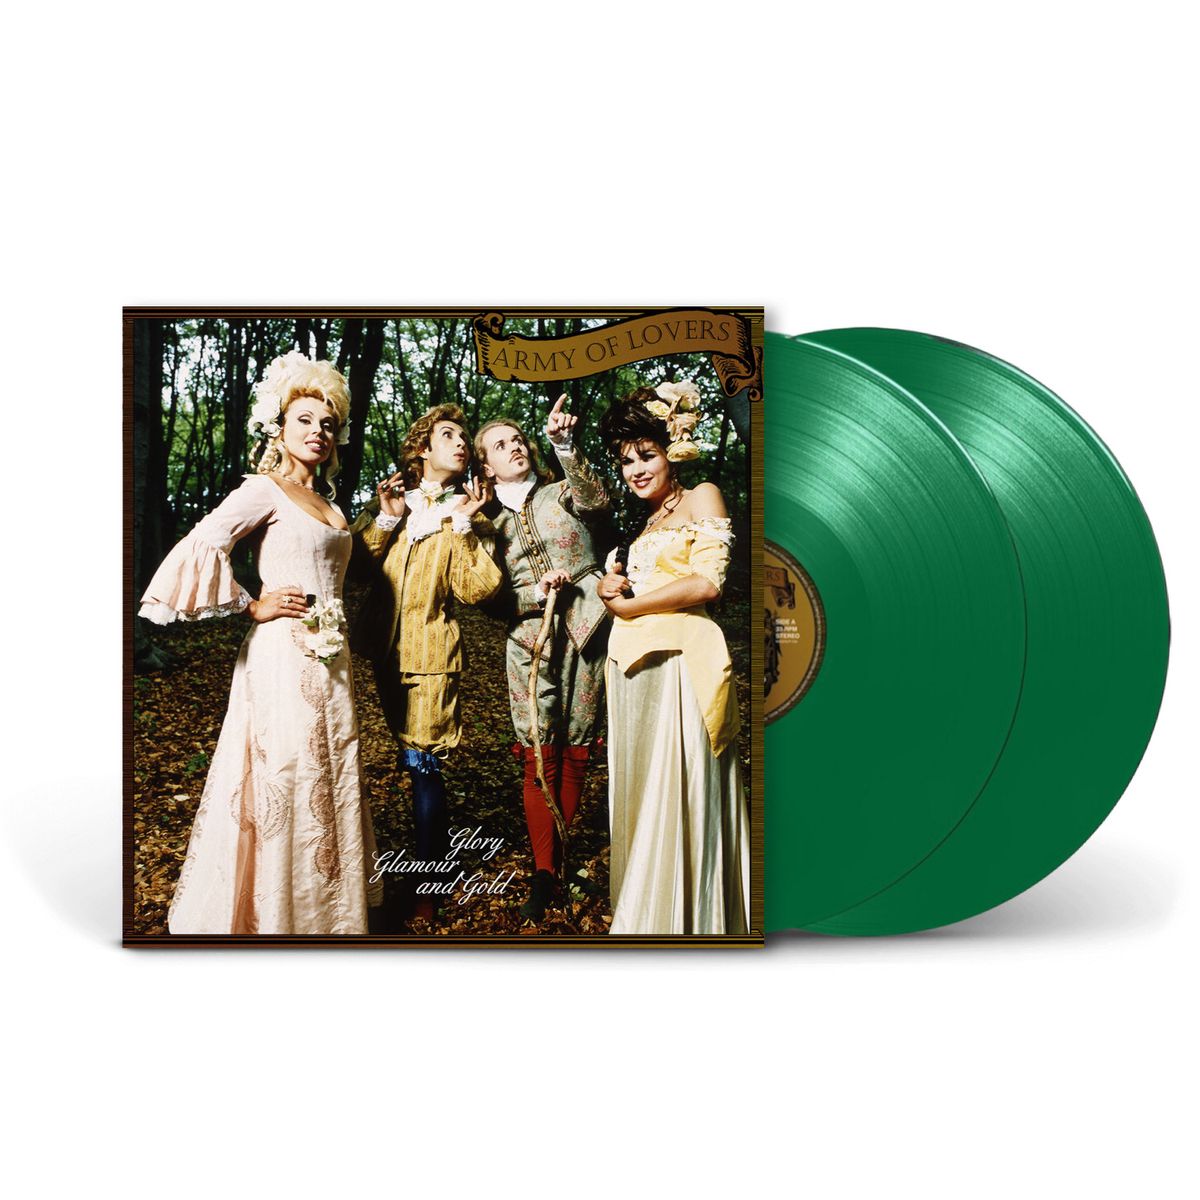 Вінілові платівки 2LP: Army Of Lovers — «Glory Glamor And Gold» (1994/1996) [Ultimate Edition Limited Green Vinyl]